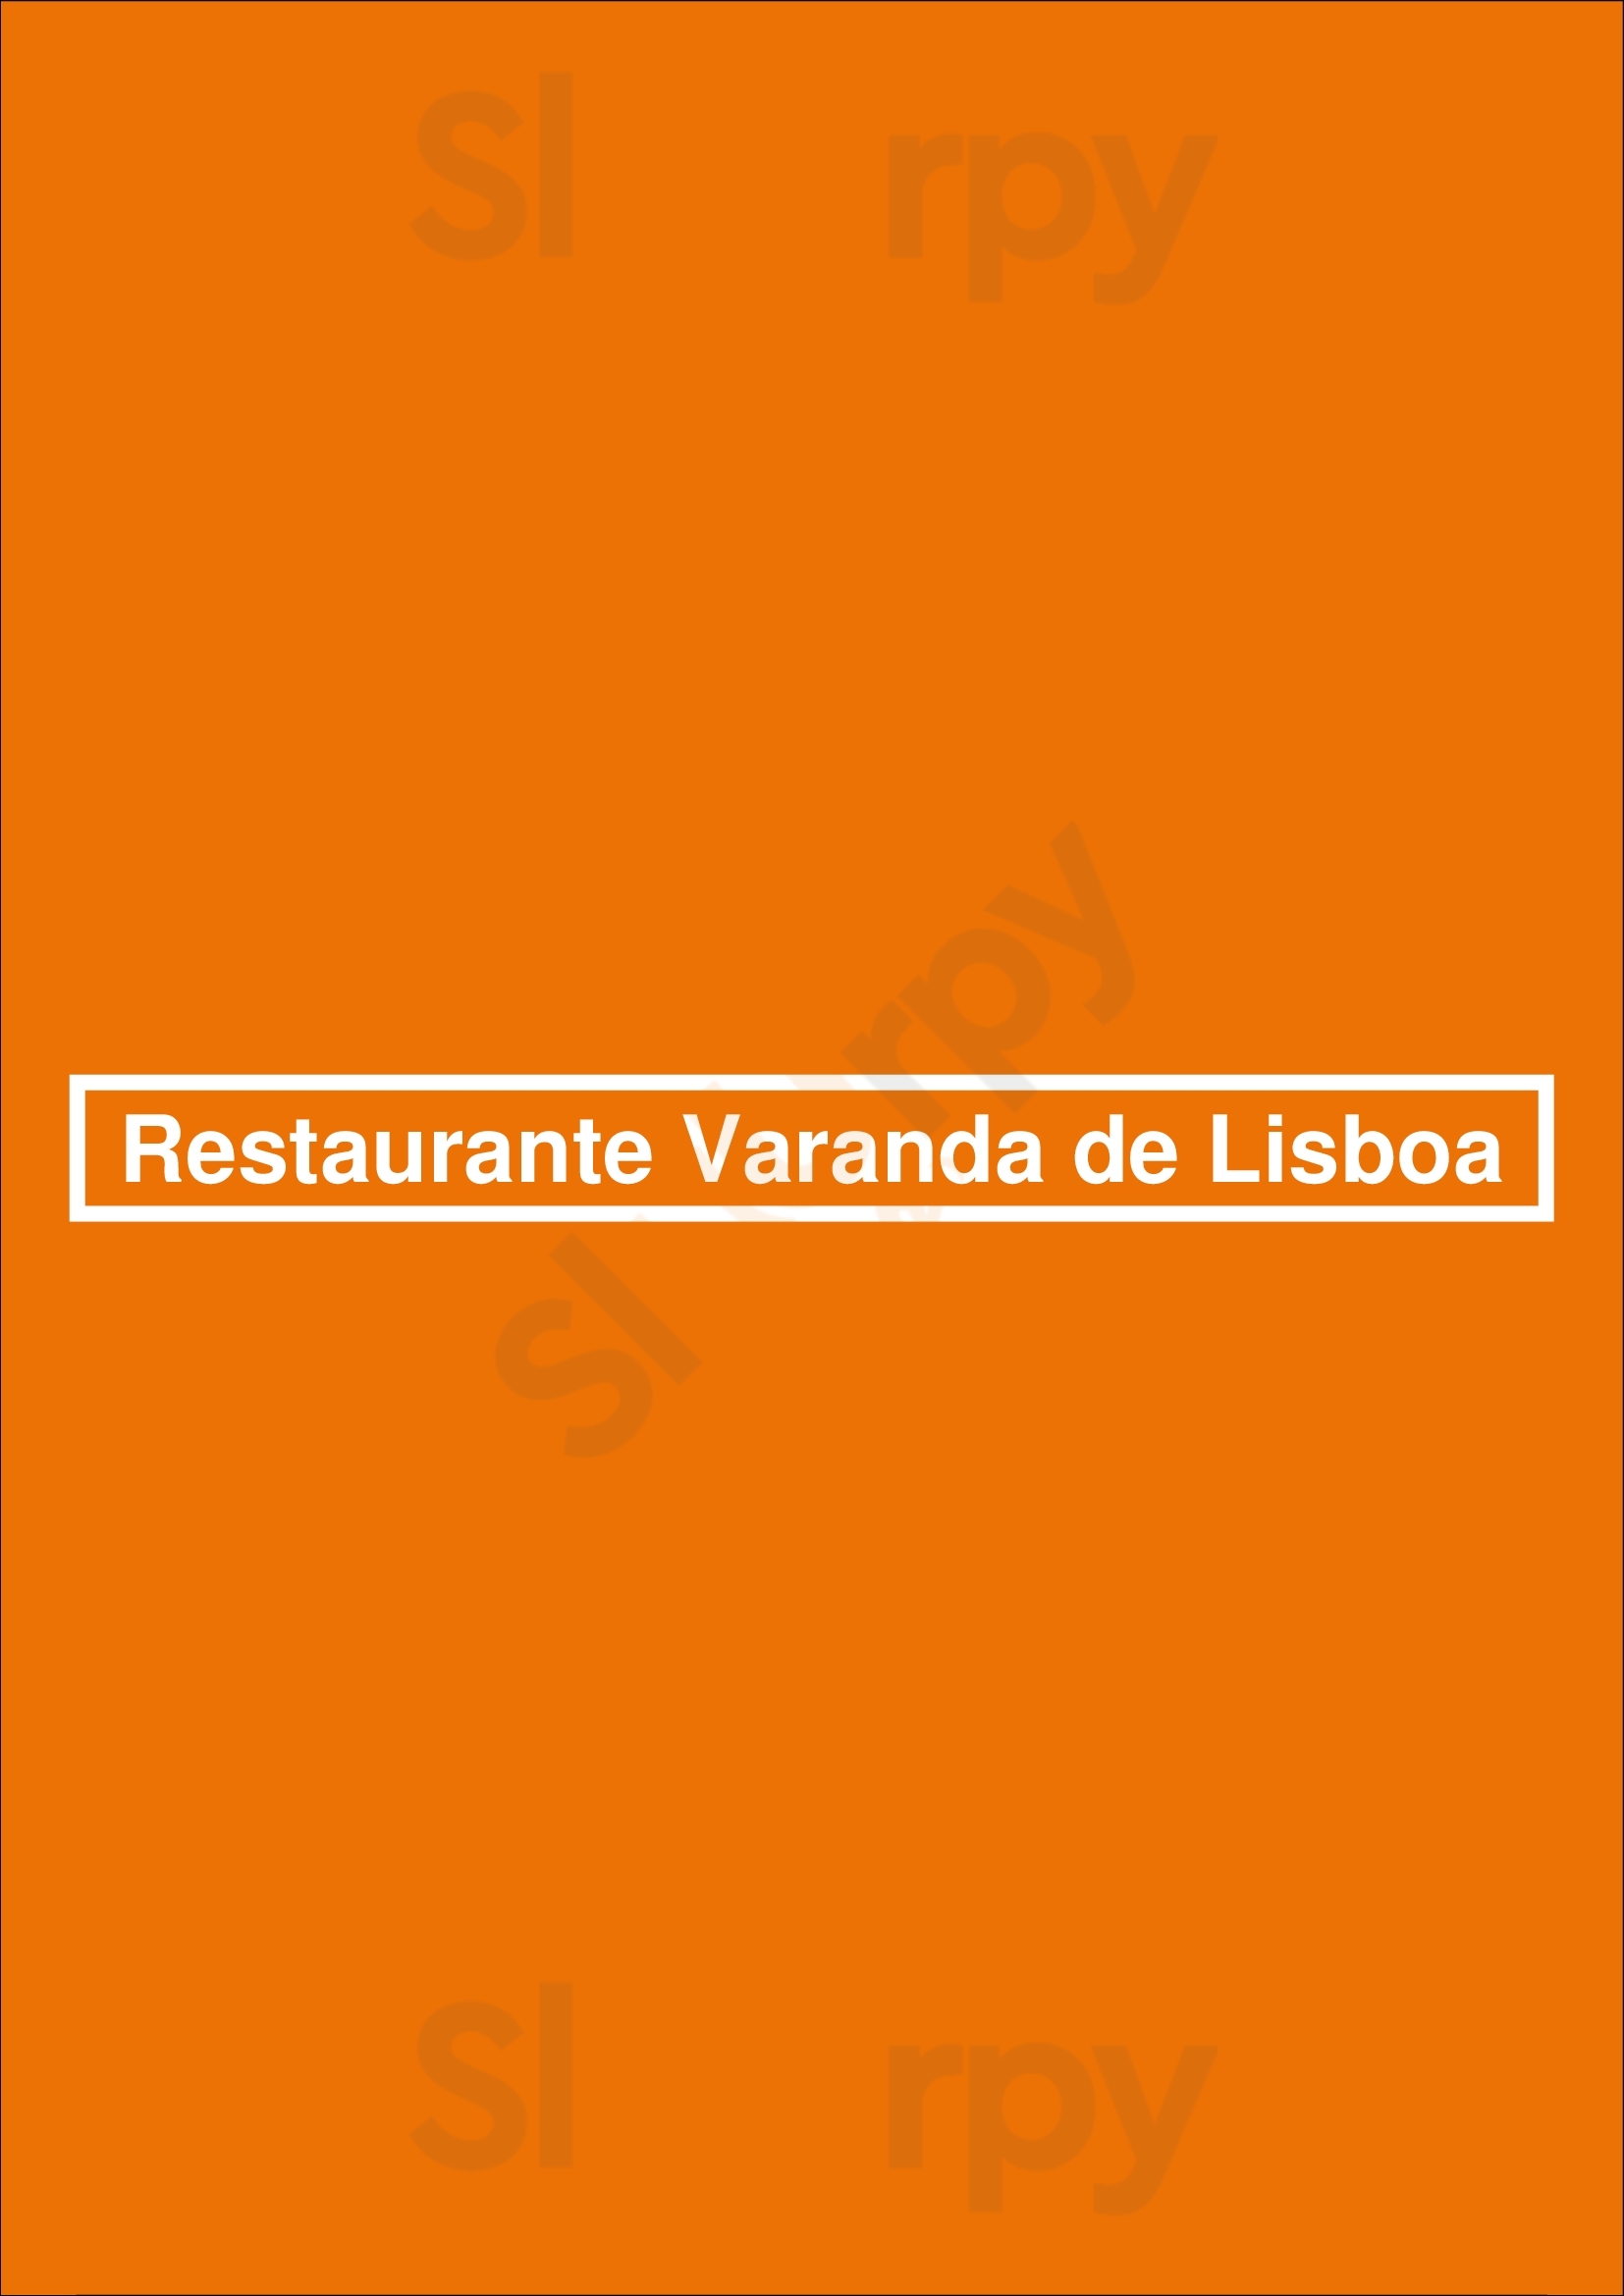 Restaurante Varanda De Lisboa Lisboa Menu - 1